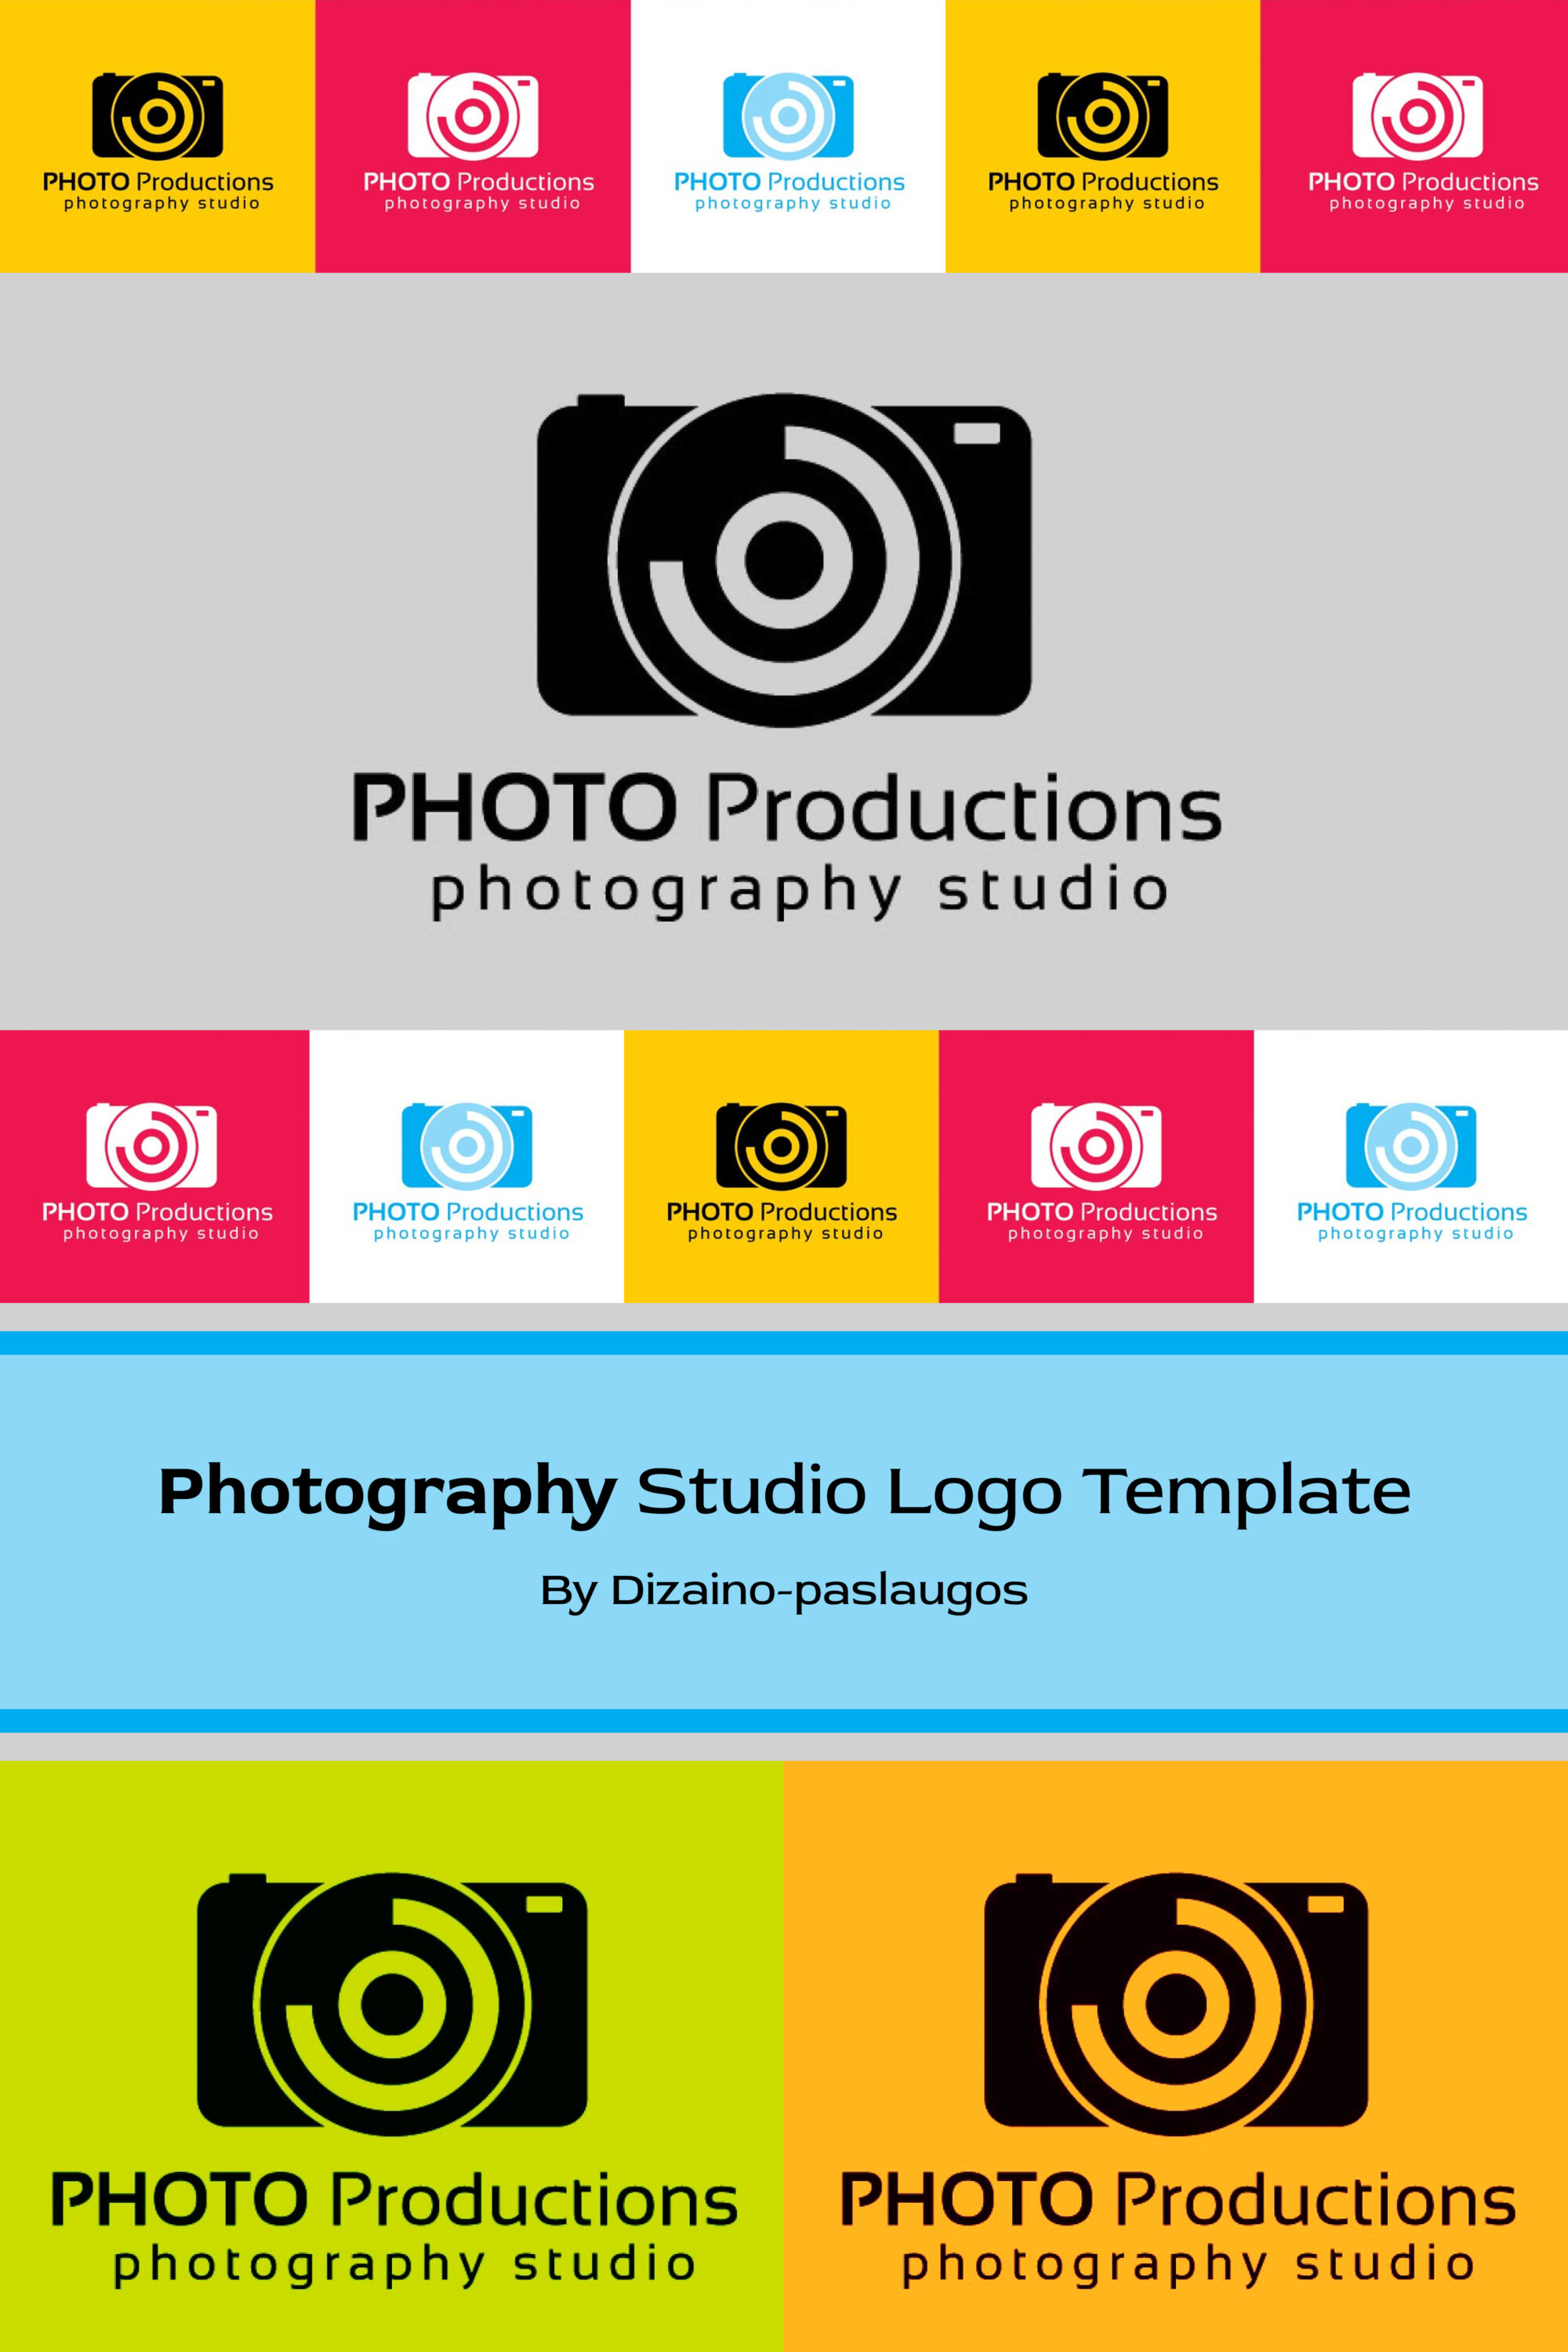 Photography studio logo template of pinterest.